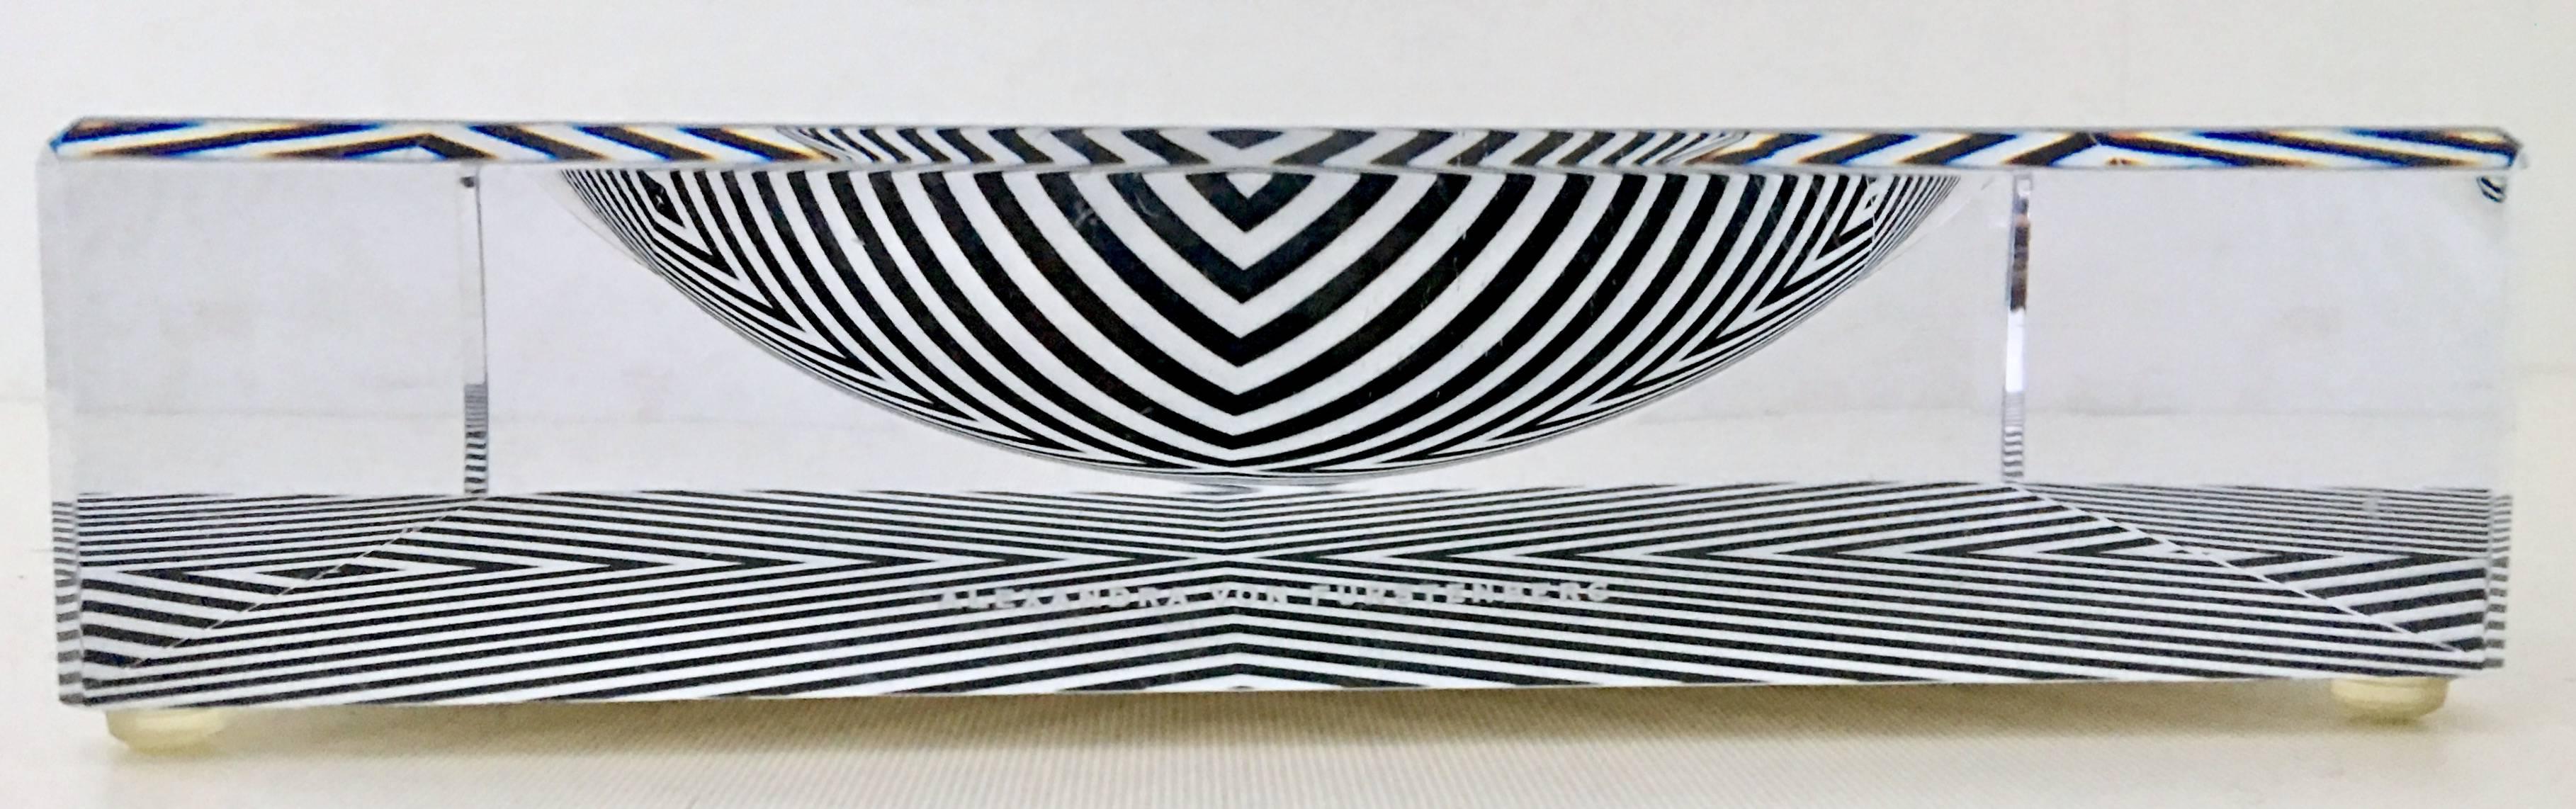 Contemporary Lucite Optic Zebra Print Square Bowl by, Alexandra Von Furstenberg